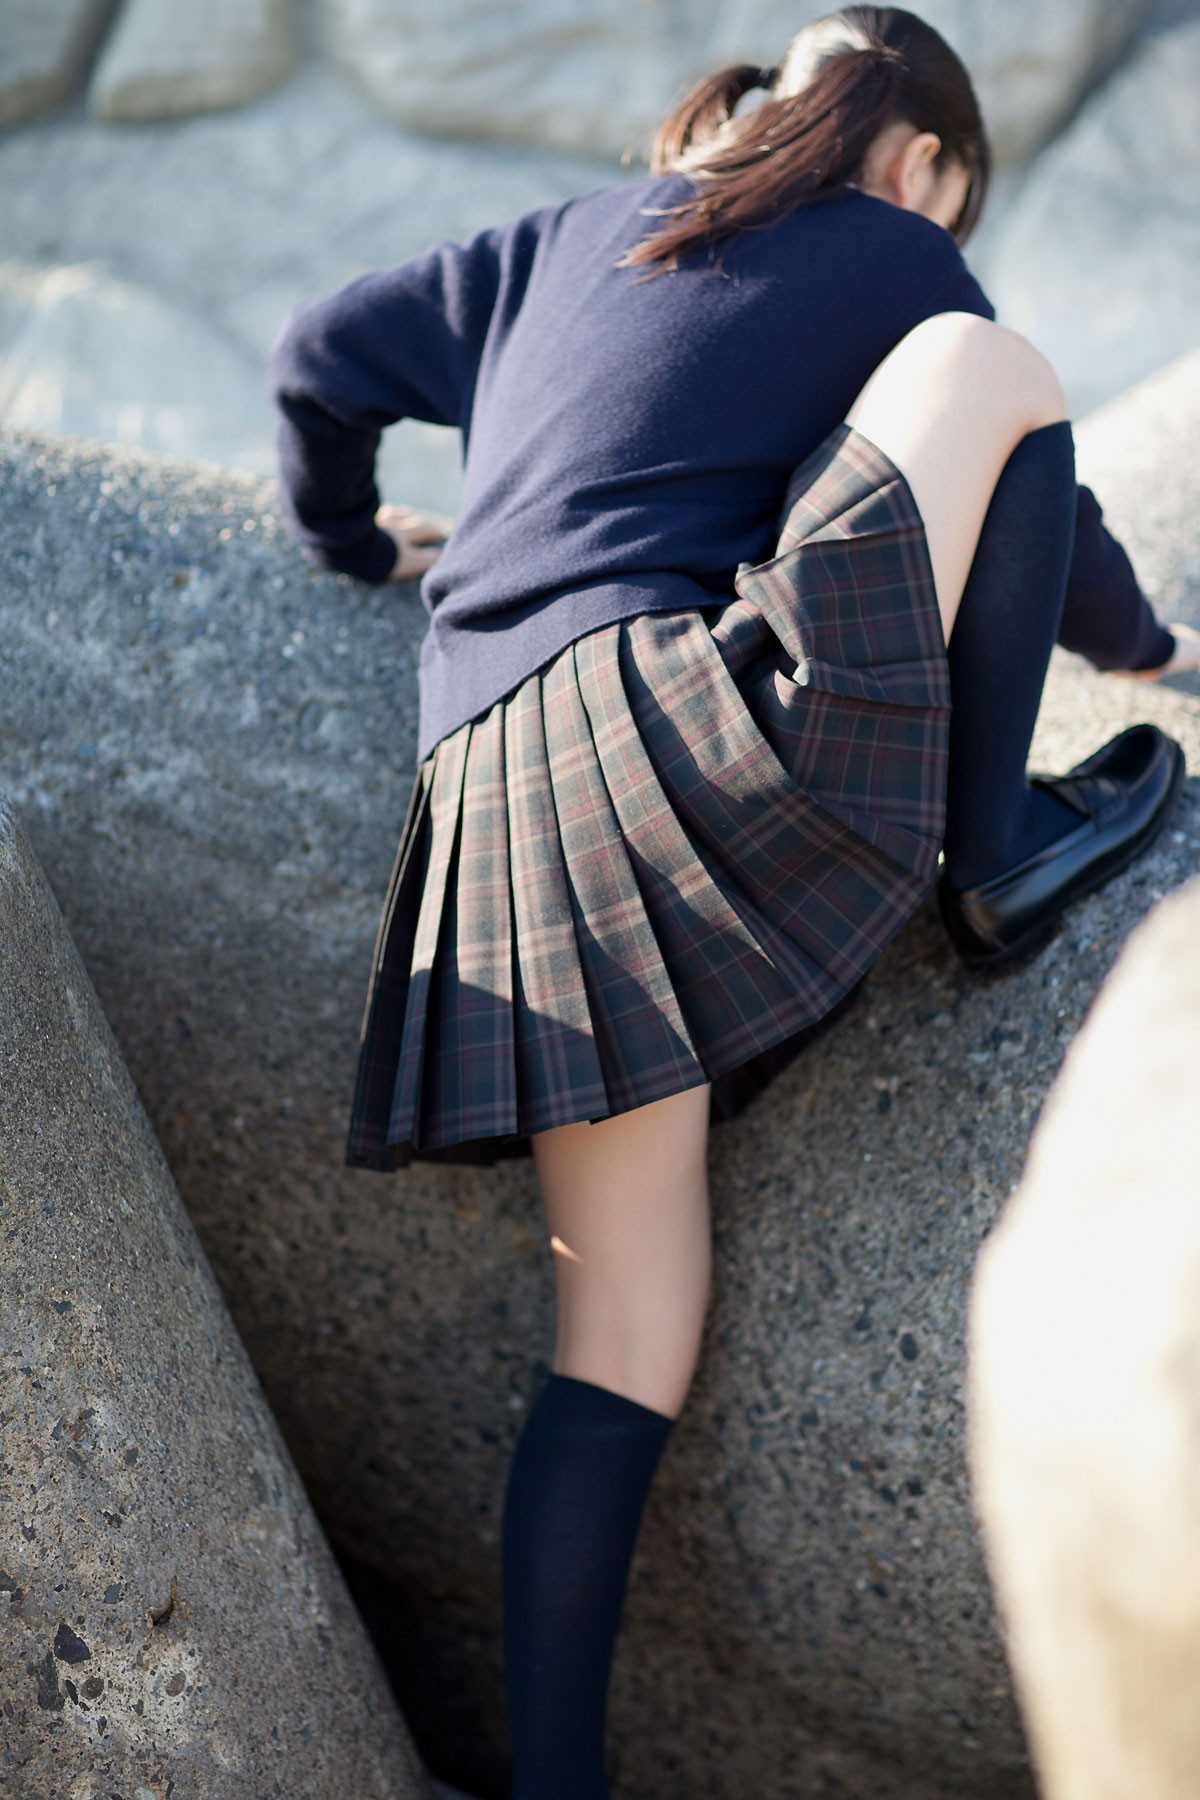 Japanese school girl hidden